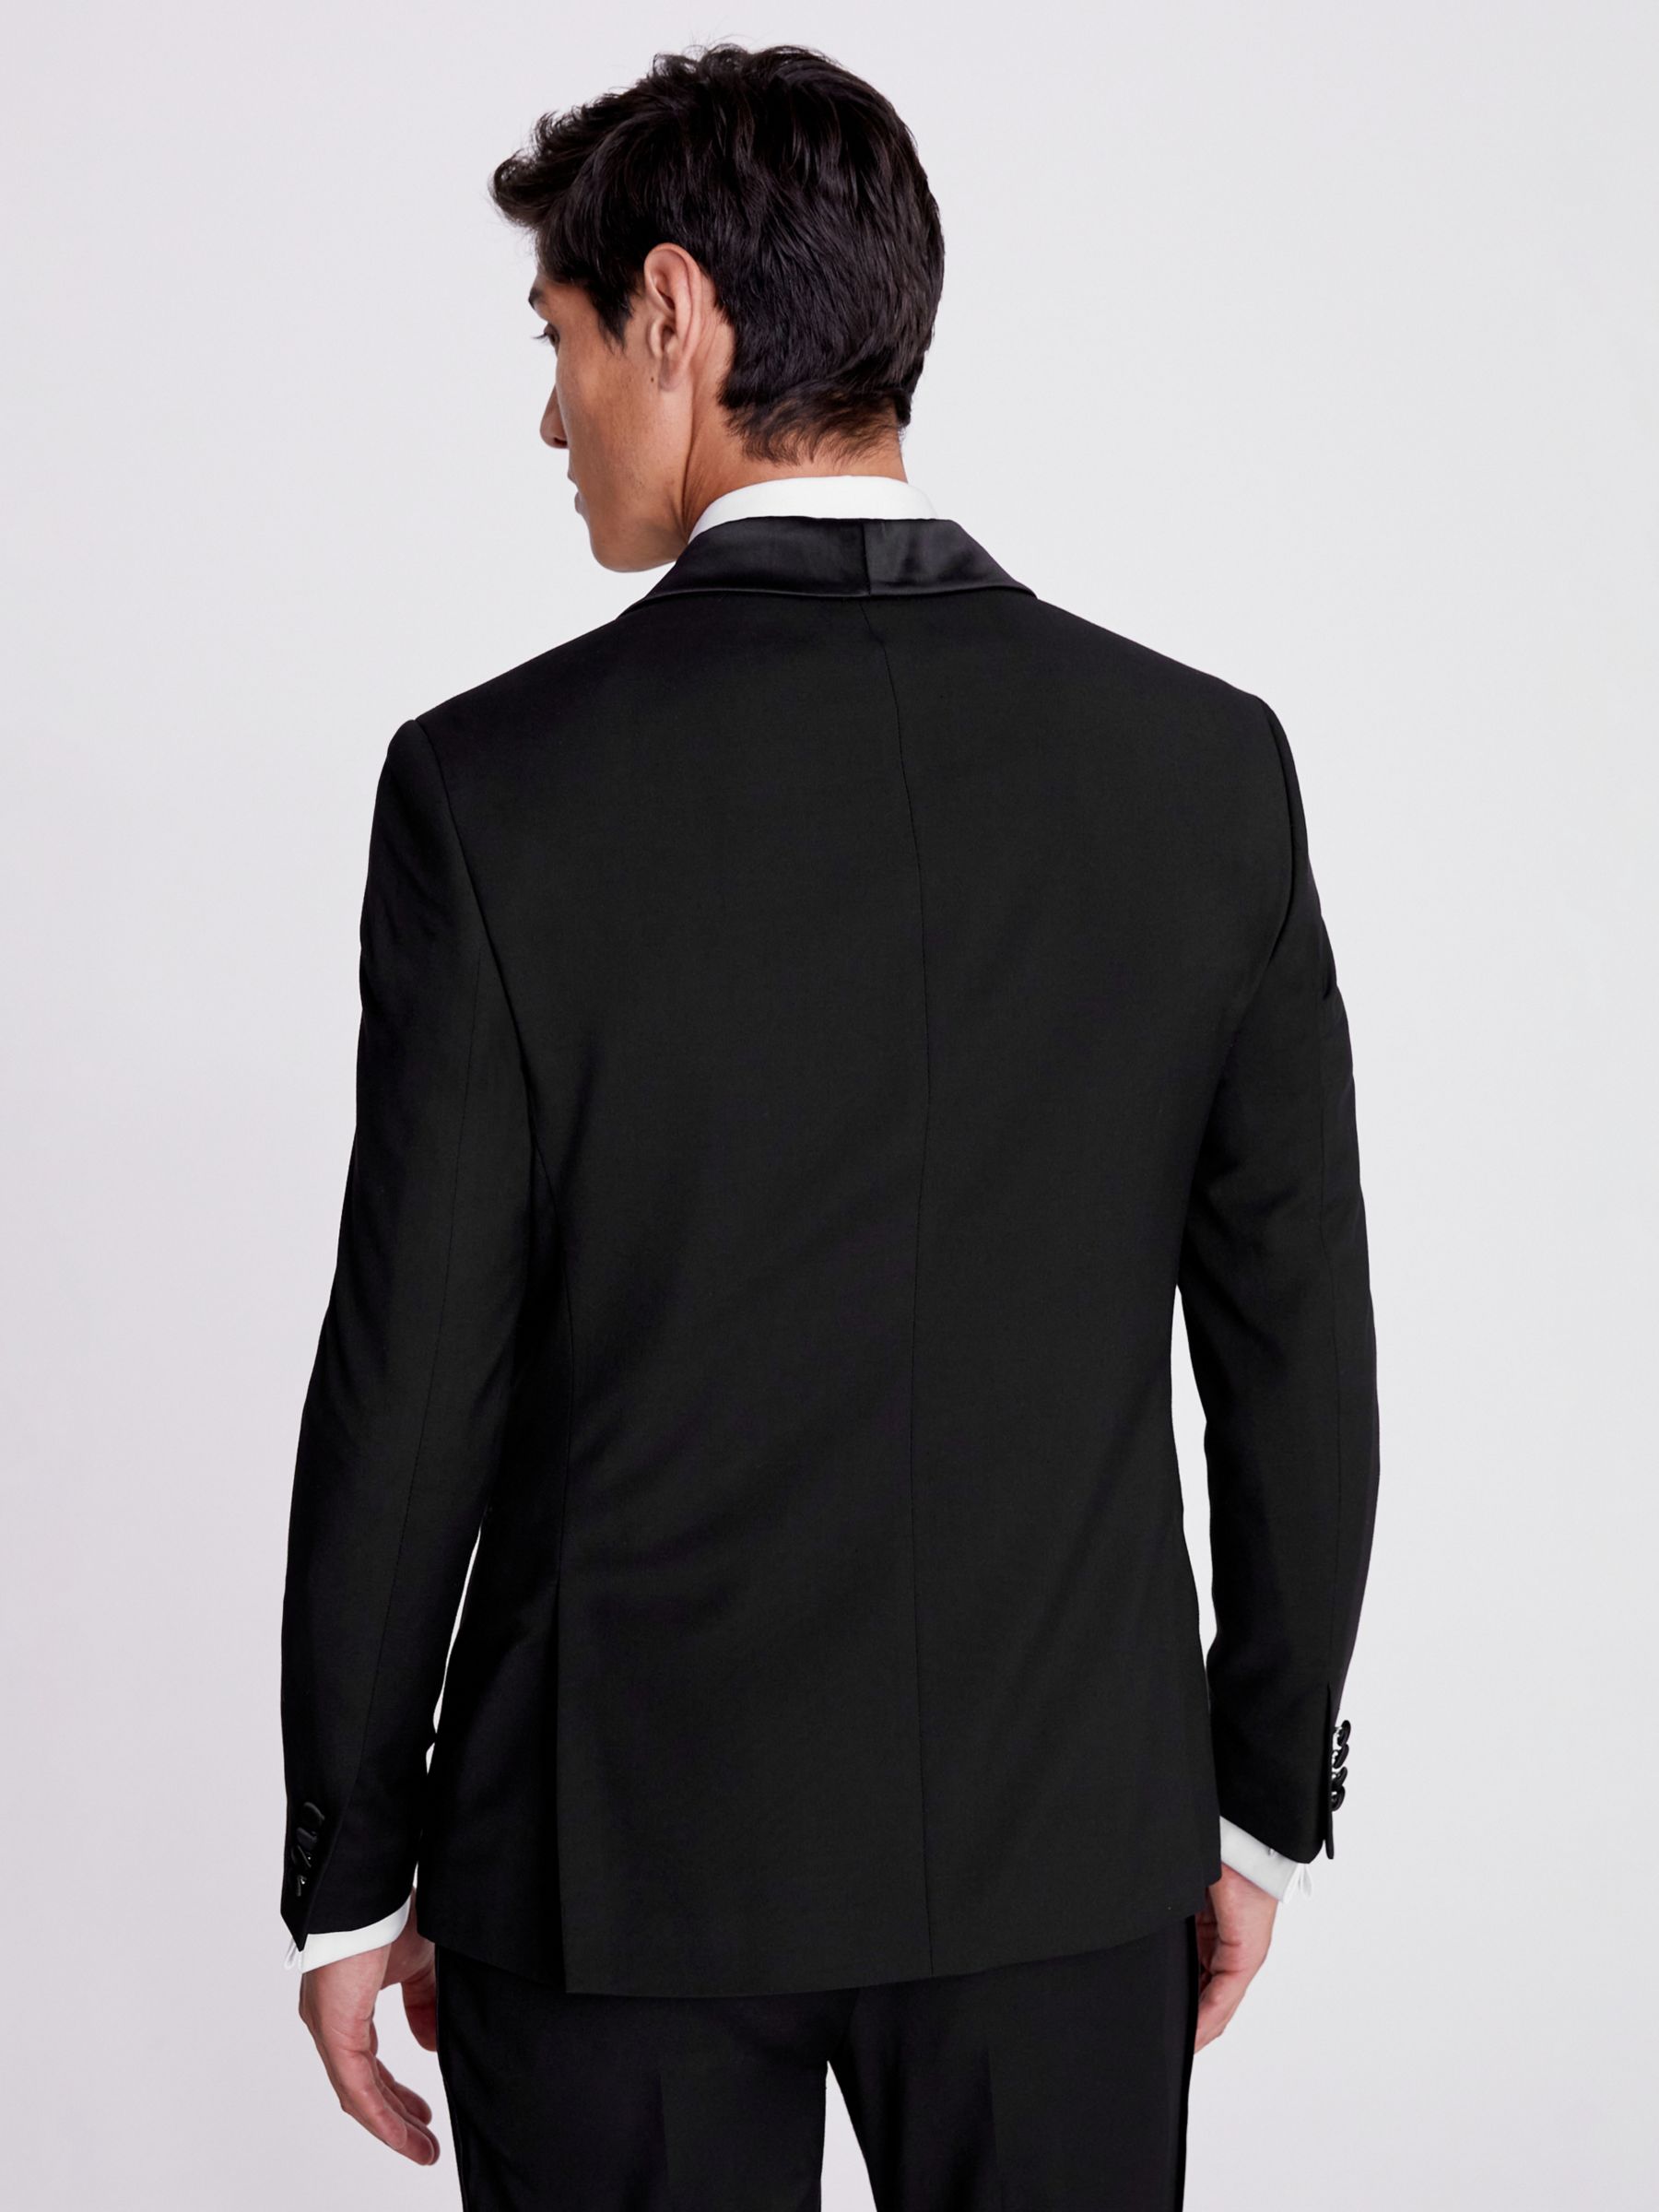 Buy Moss Slim Fit Tuxedo Jacket, Black Online at johnlewis.com